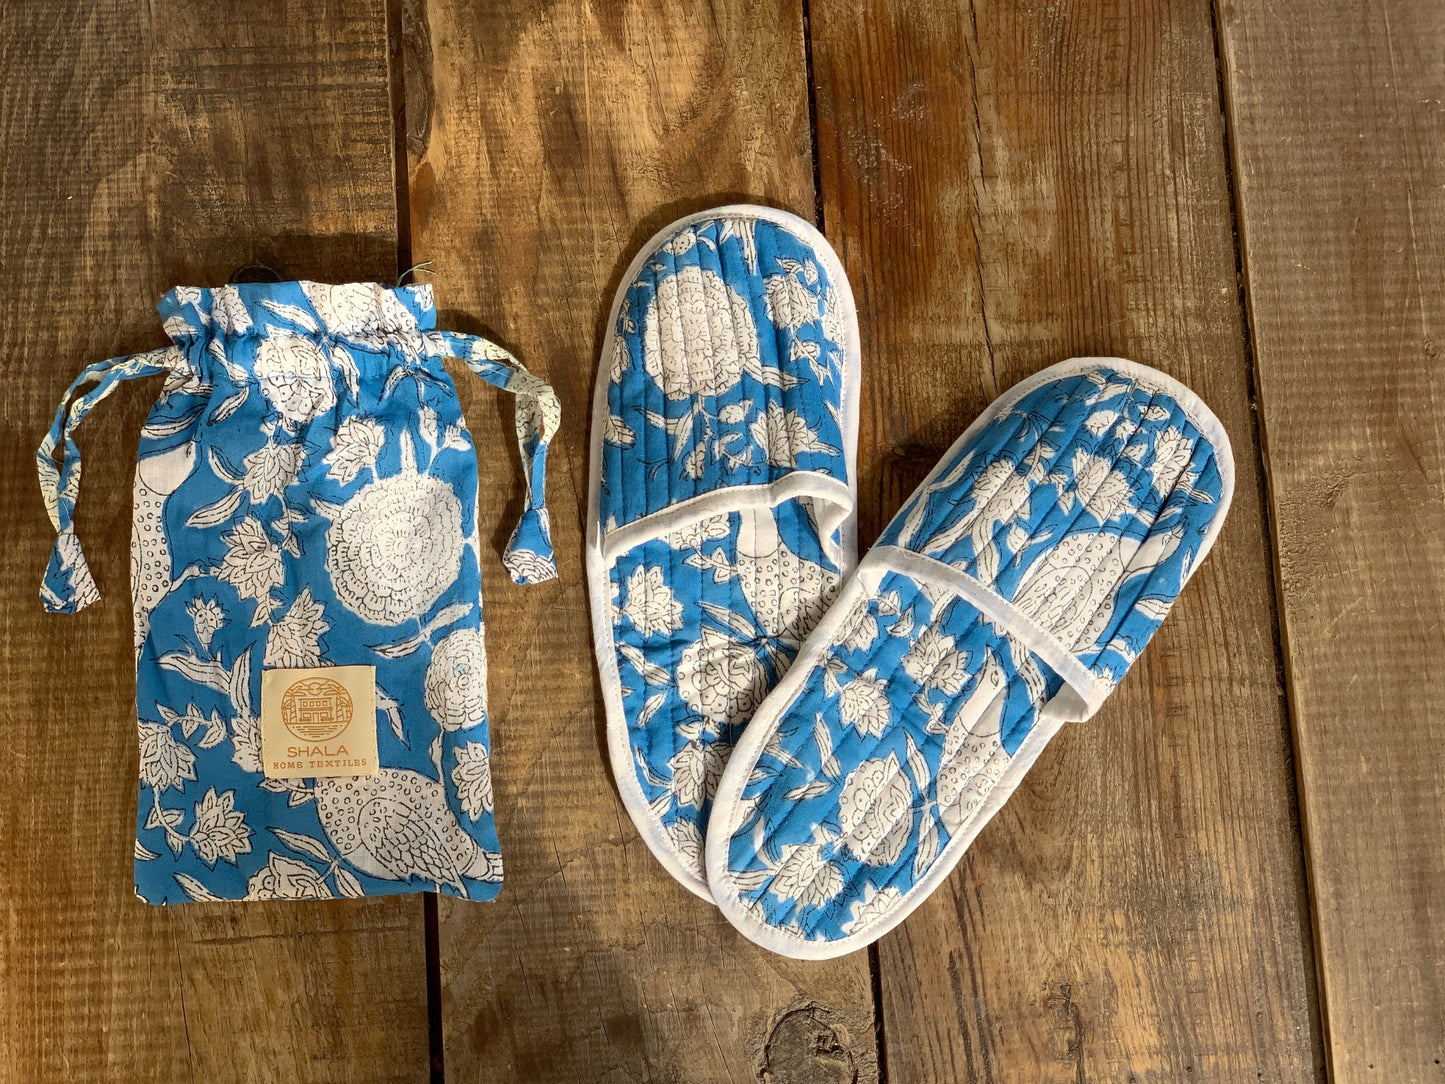 Camisón · Algodón puro estampado block print artesanal en India · Camisa para dormir algodón 100% · Camisón algodón manga larga · Azul